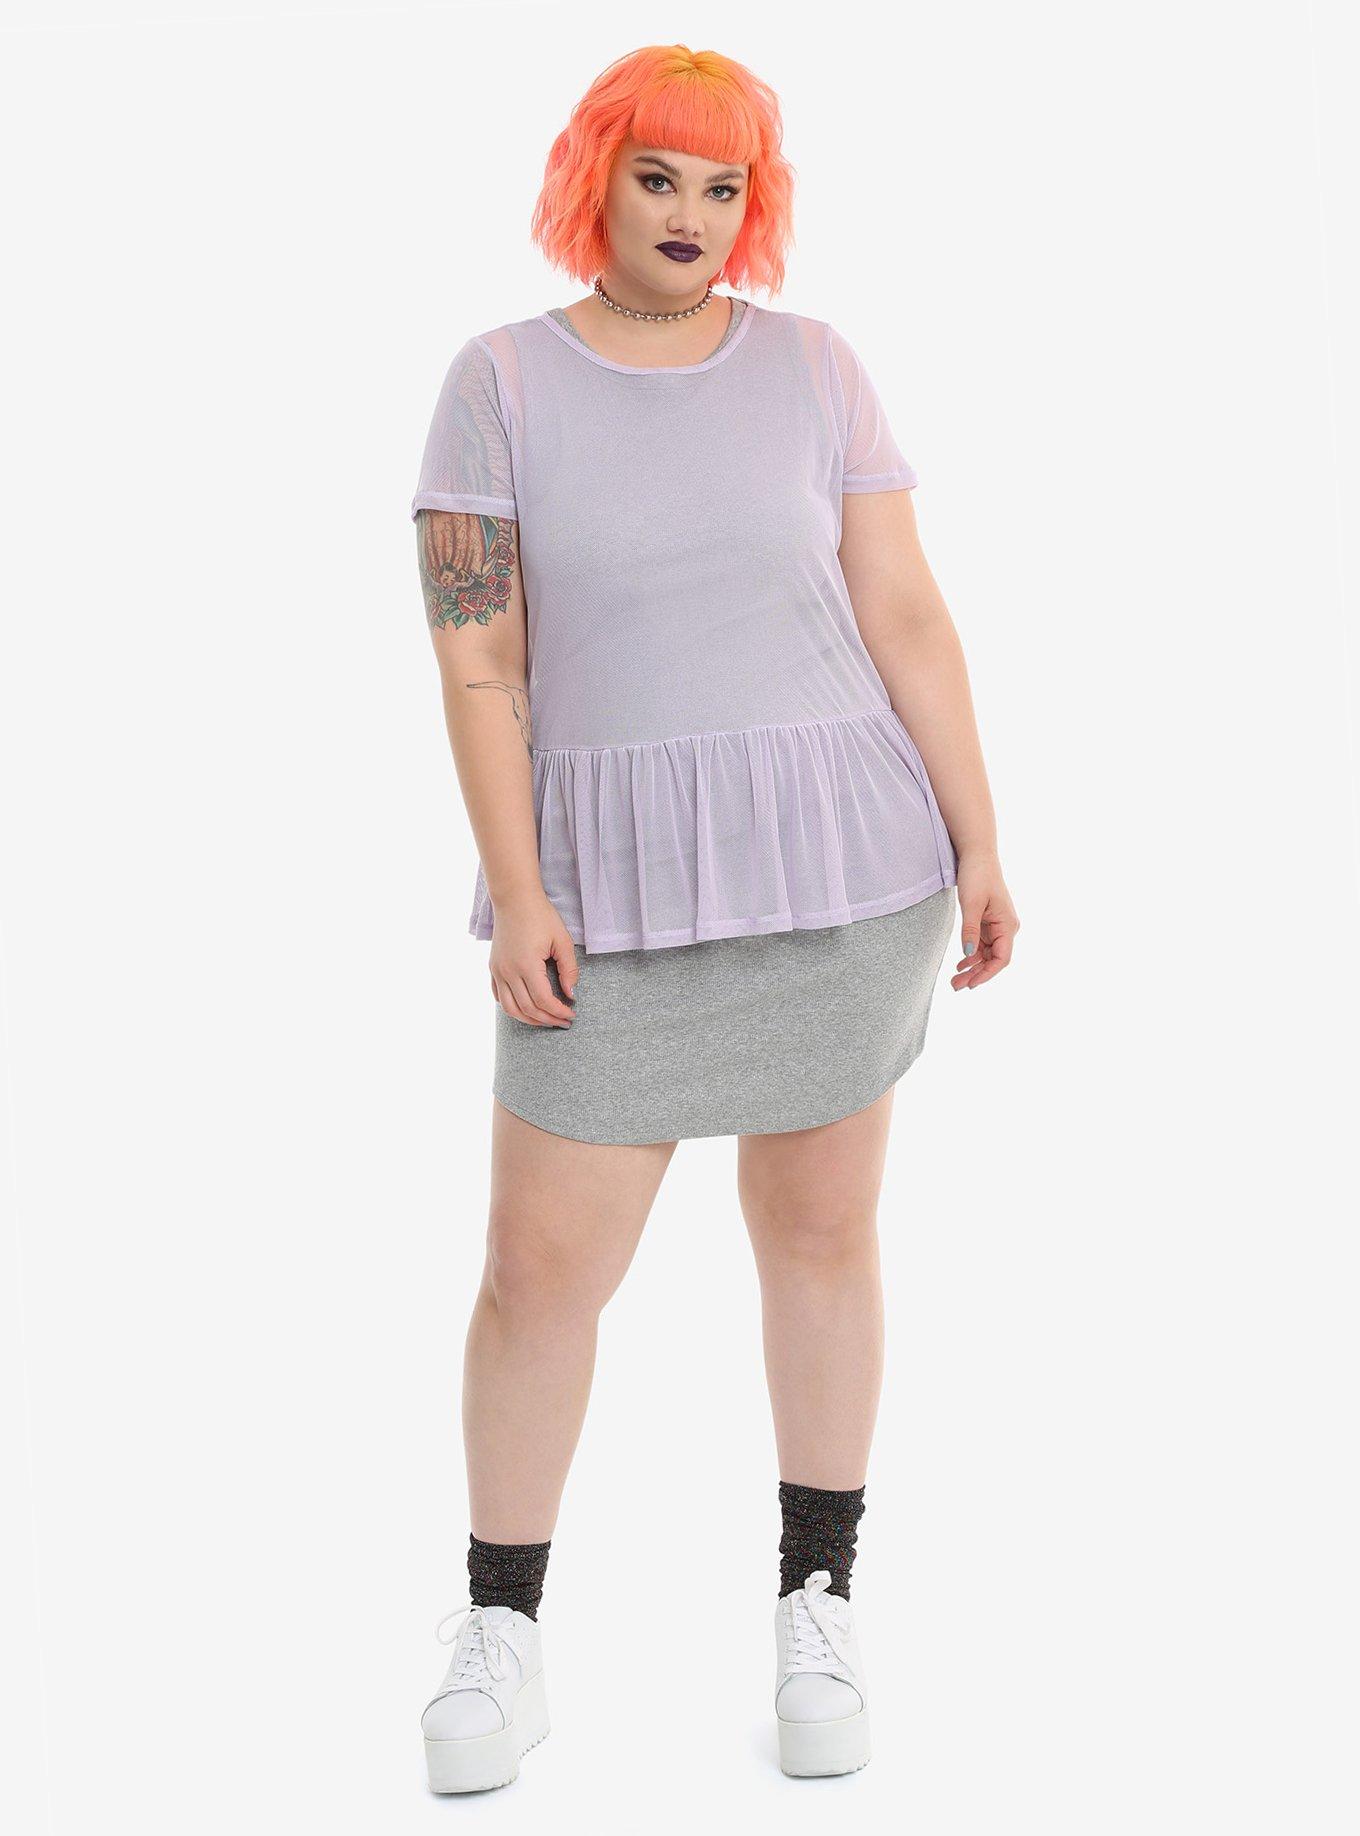 Lavender Mesh Peplum Girls Top Plus Size, , alternate